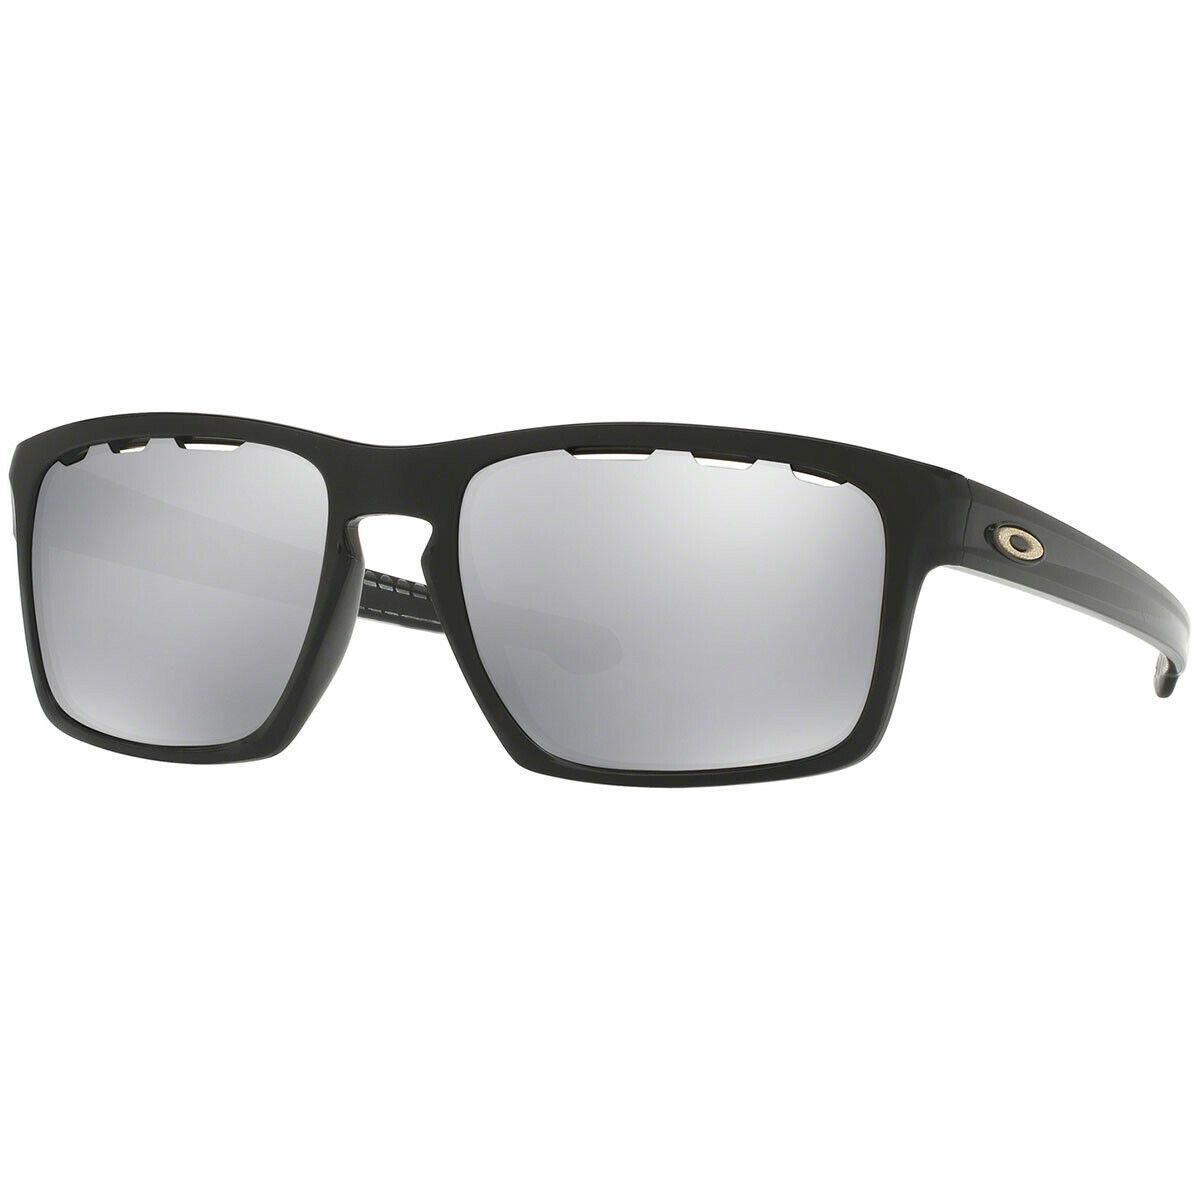 Oakley Sunglasses Sliver Vented Polished Black W/chrome Iridium Lens OO9262-4257 - Frame: Polished Black, Lens: